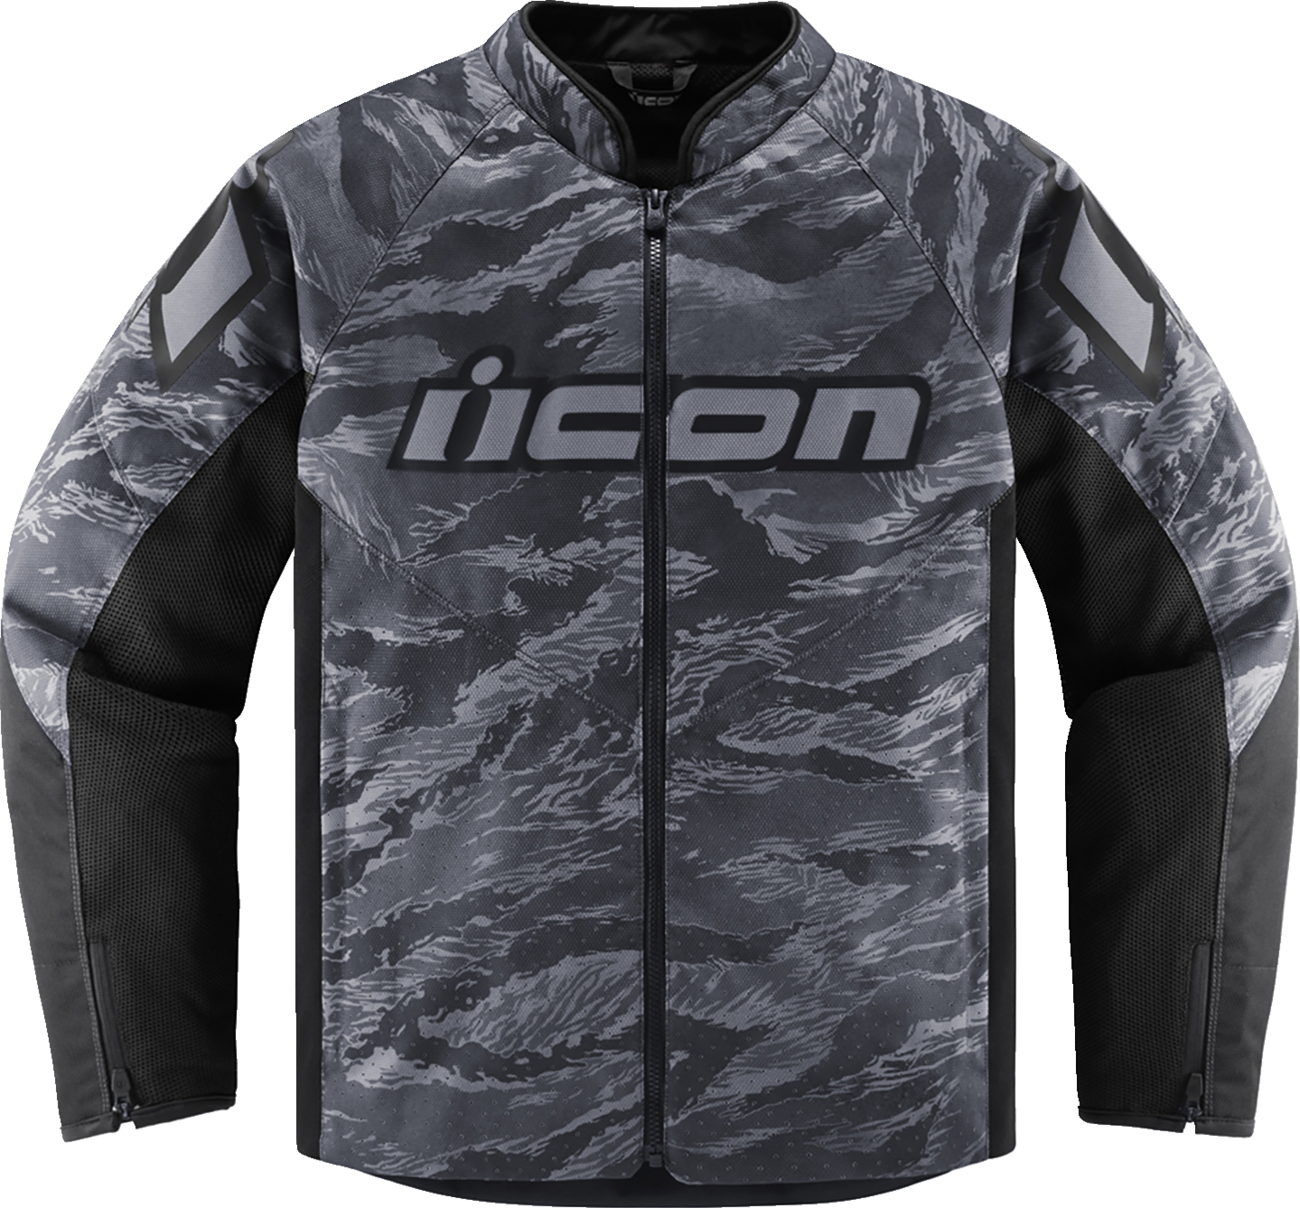 ICON Hooligan CE Tiger's Blood Jacket - Gray - Medium 2820-6160